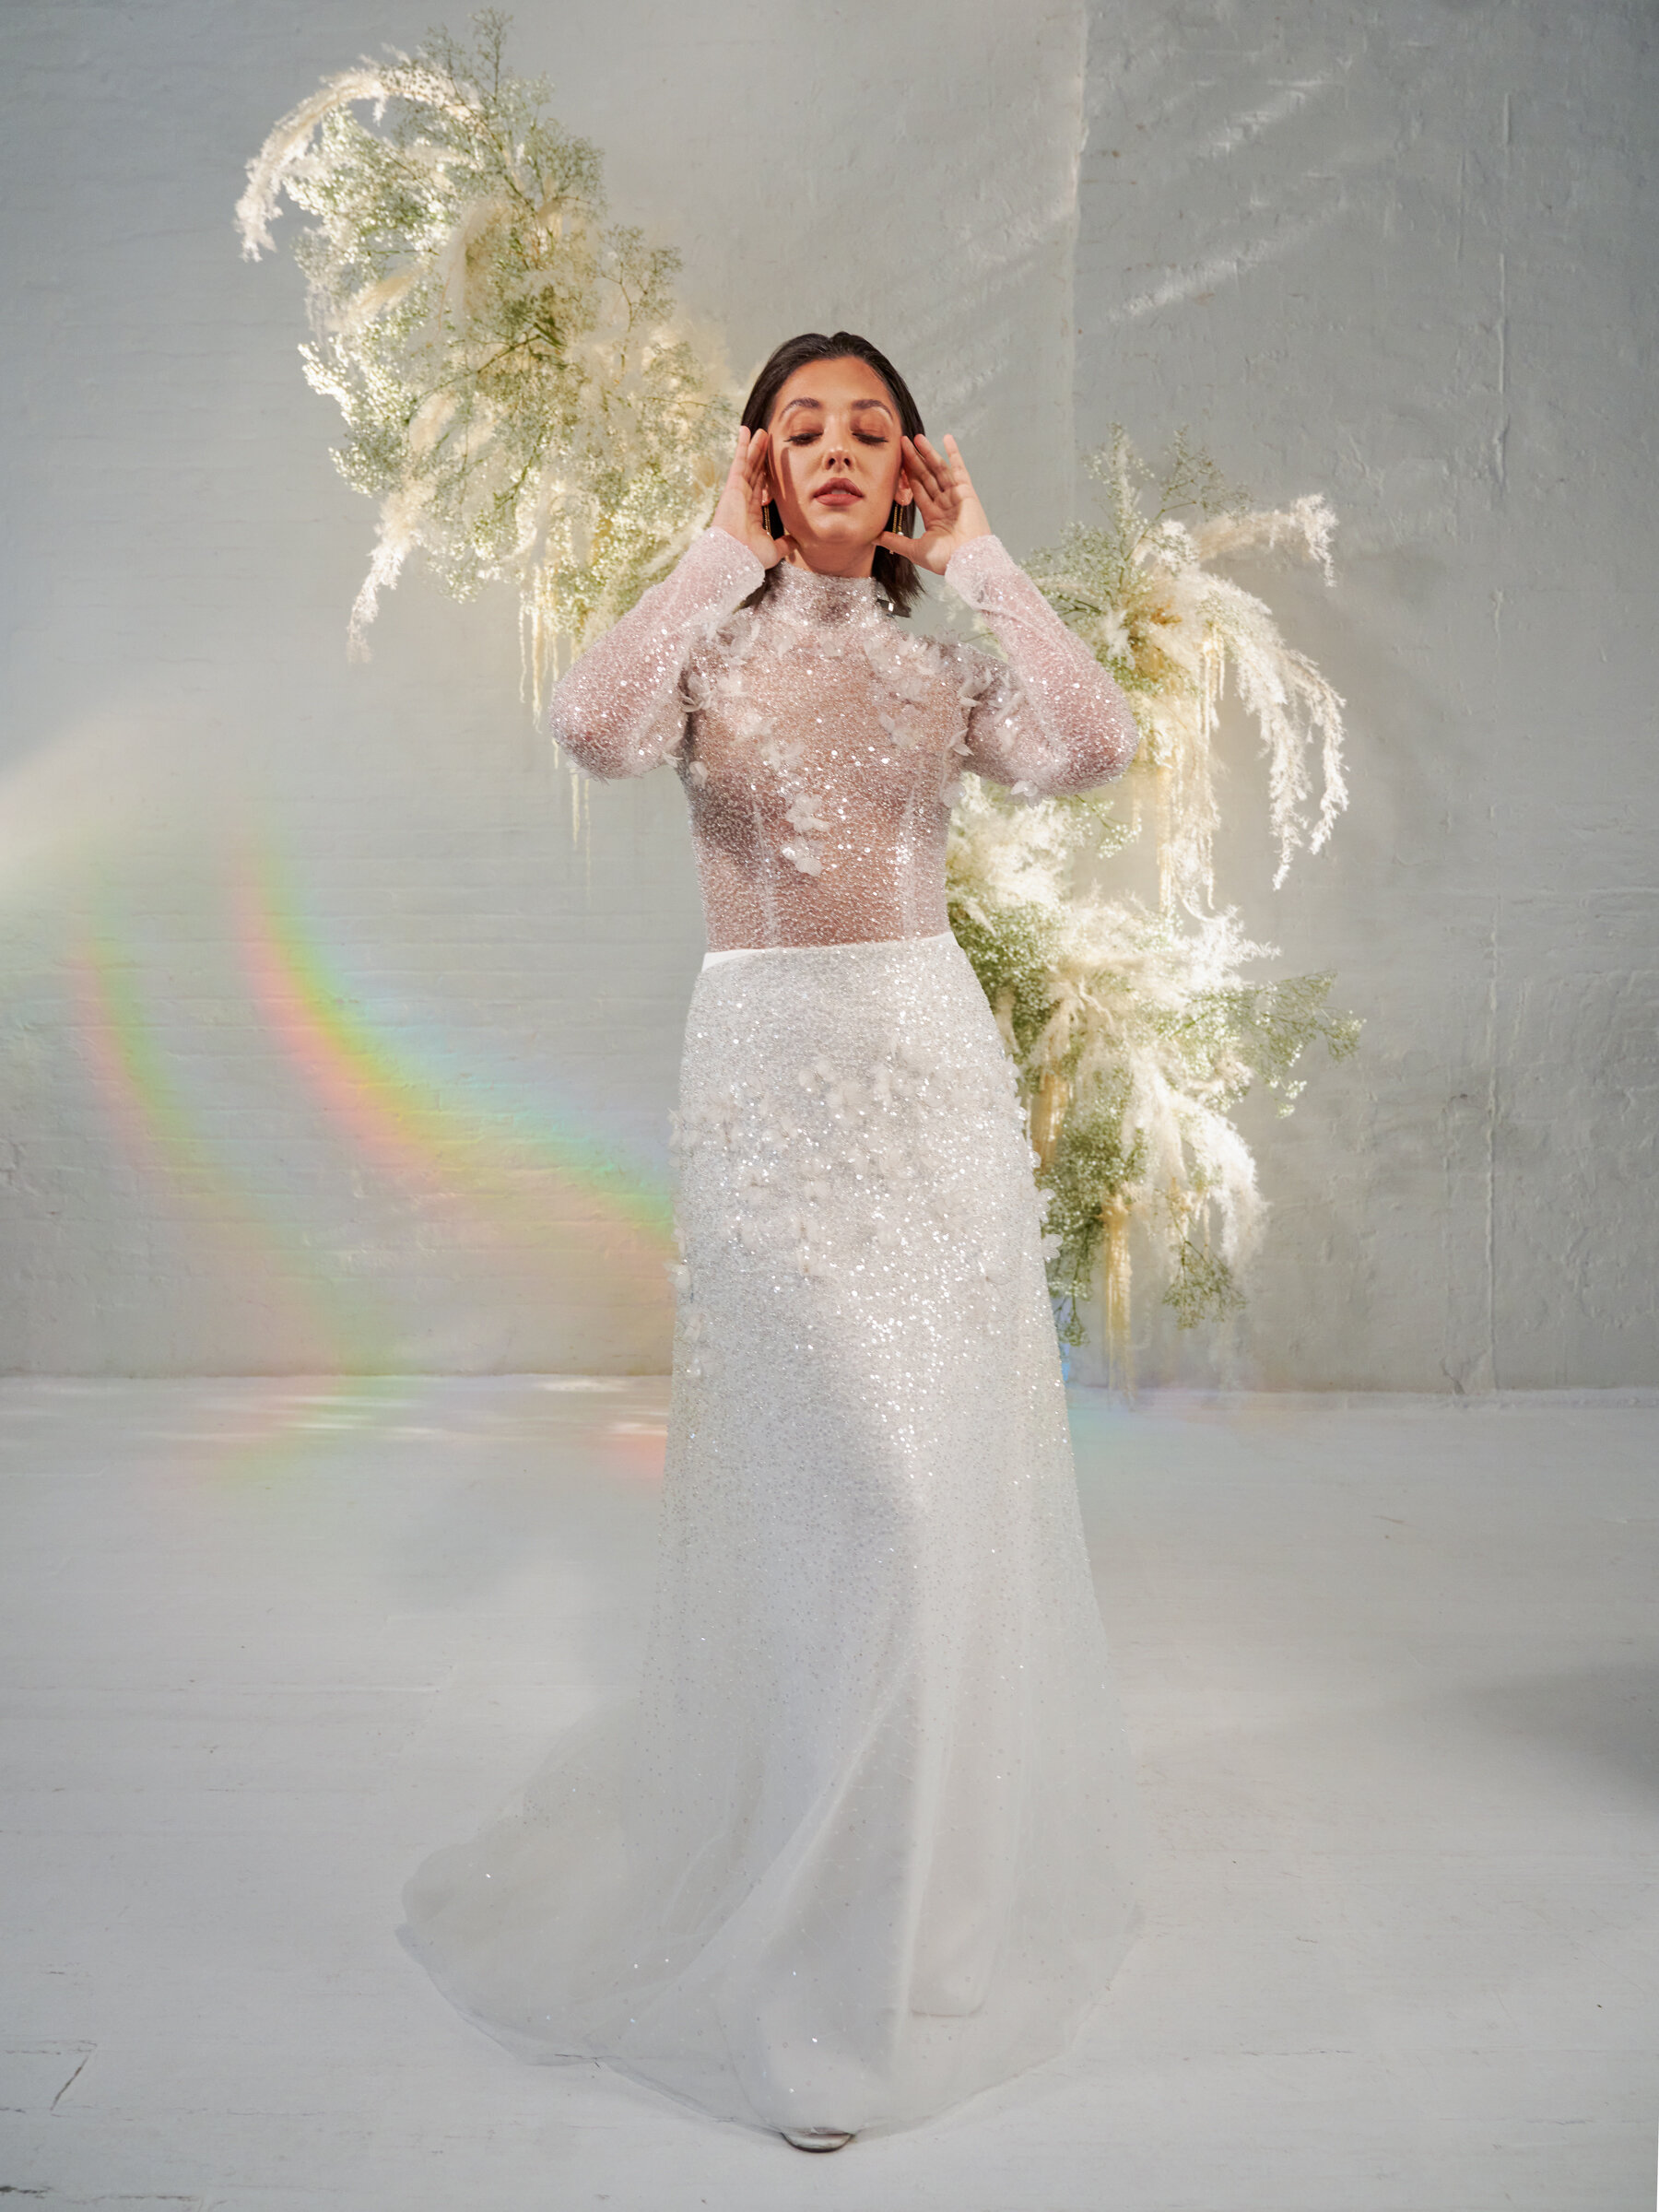 Fantasia wedding gown -modern whimsical high neck 3.jpg